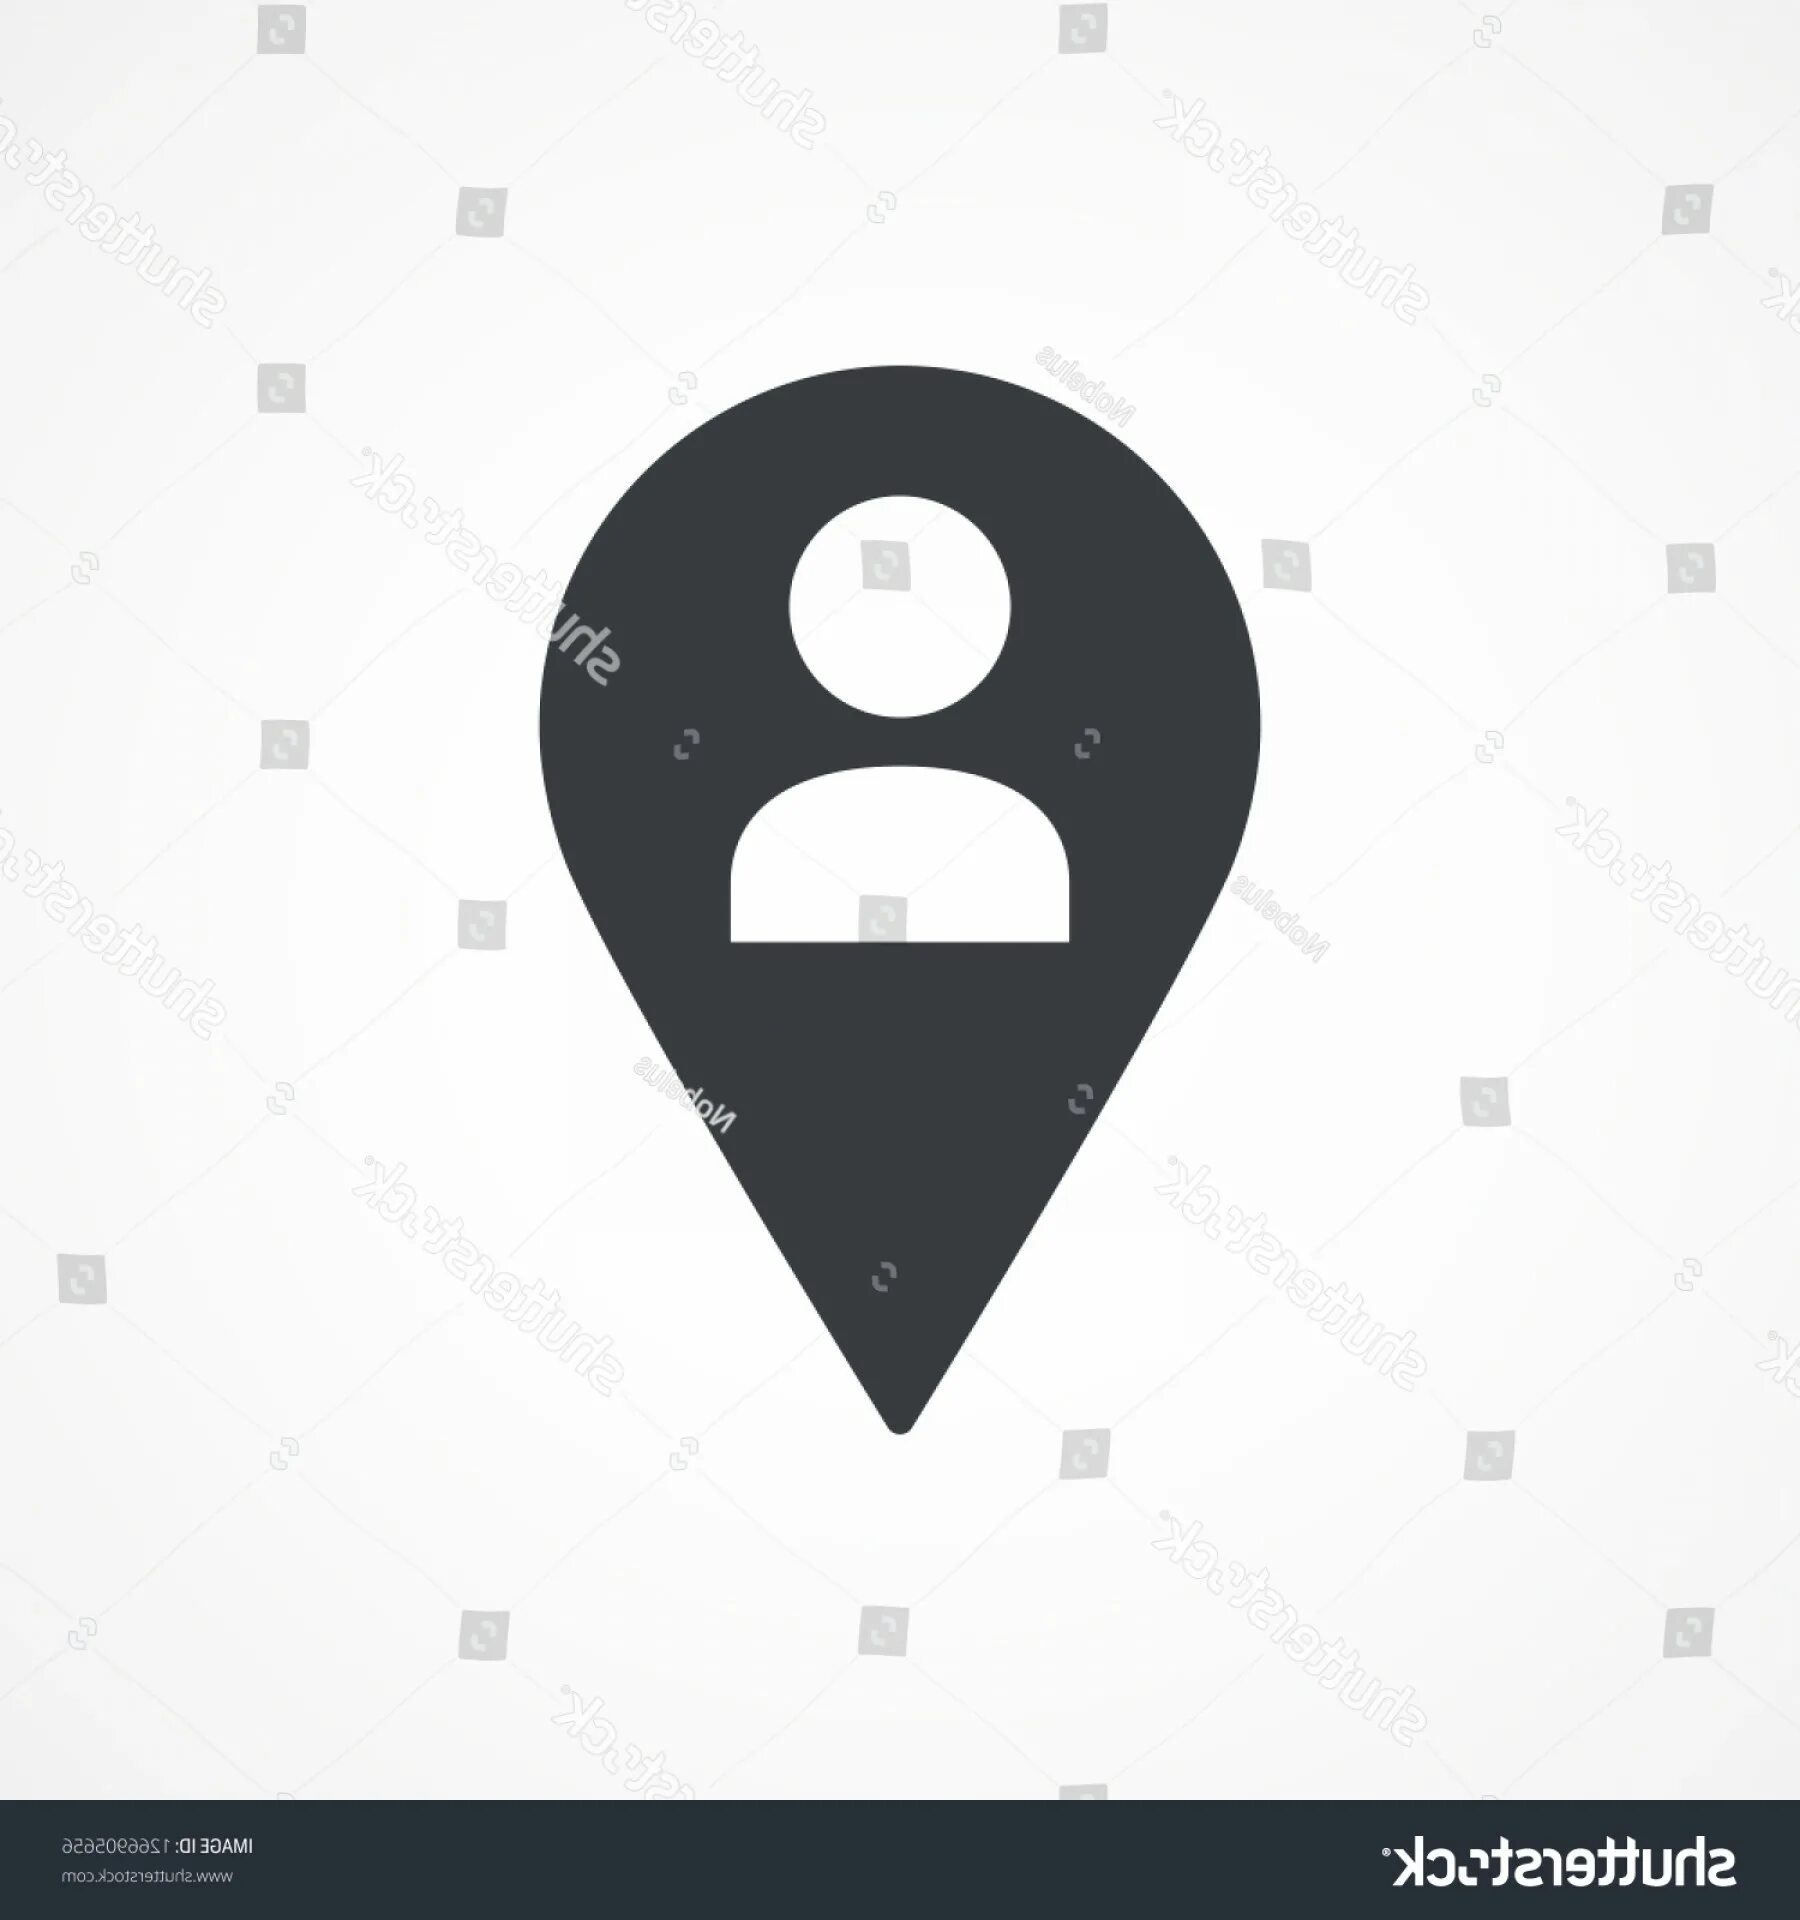 Карта пользователя вектор. User location icon. Булавка Pin Marker to Taxi. Locate user